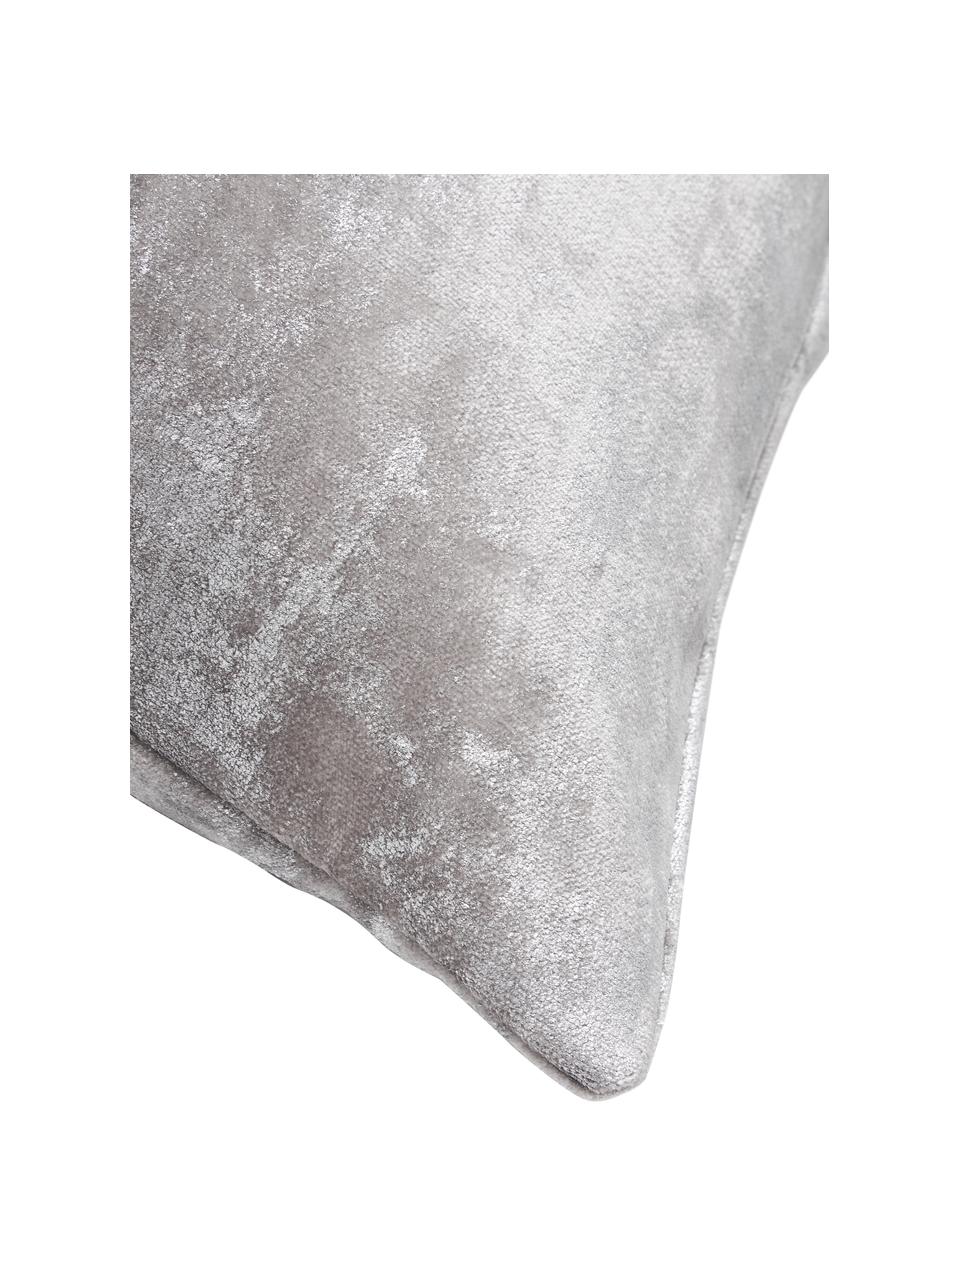 Samt-Kissenhülle Shiny mit schimmerndem Vintage Muster, 100 % Polyestersamt, Grau, Silberfarben, B 40 x L 40 cm